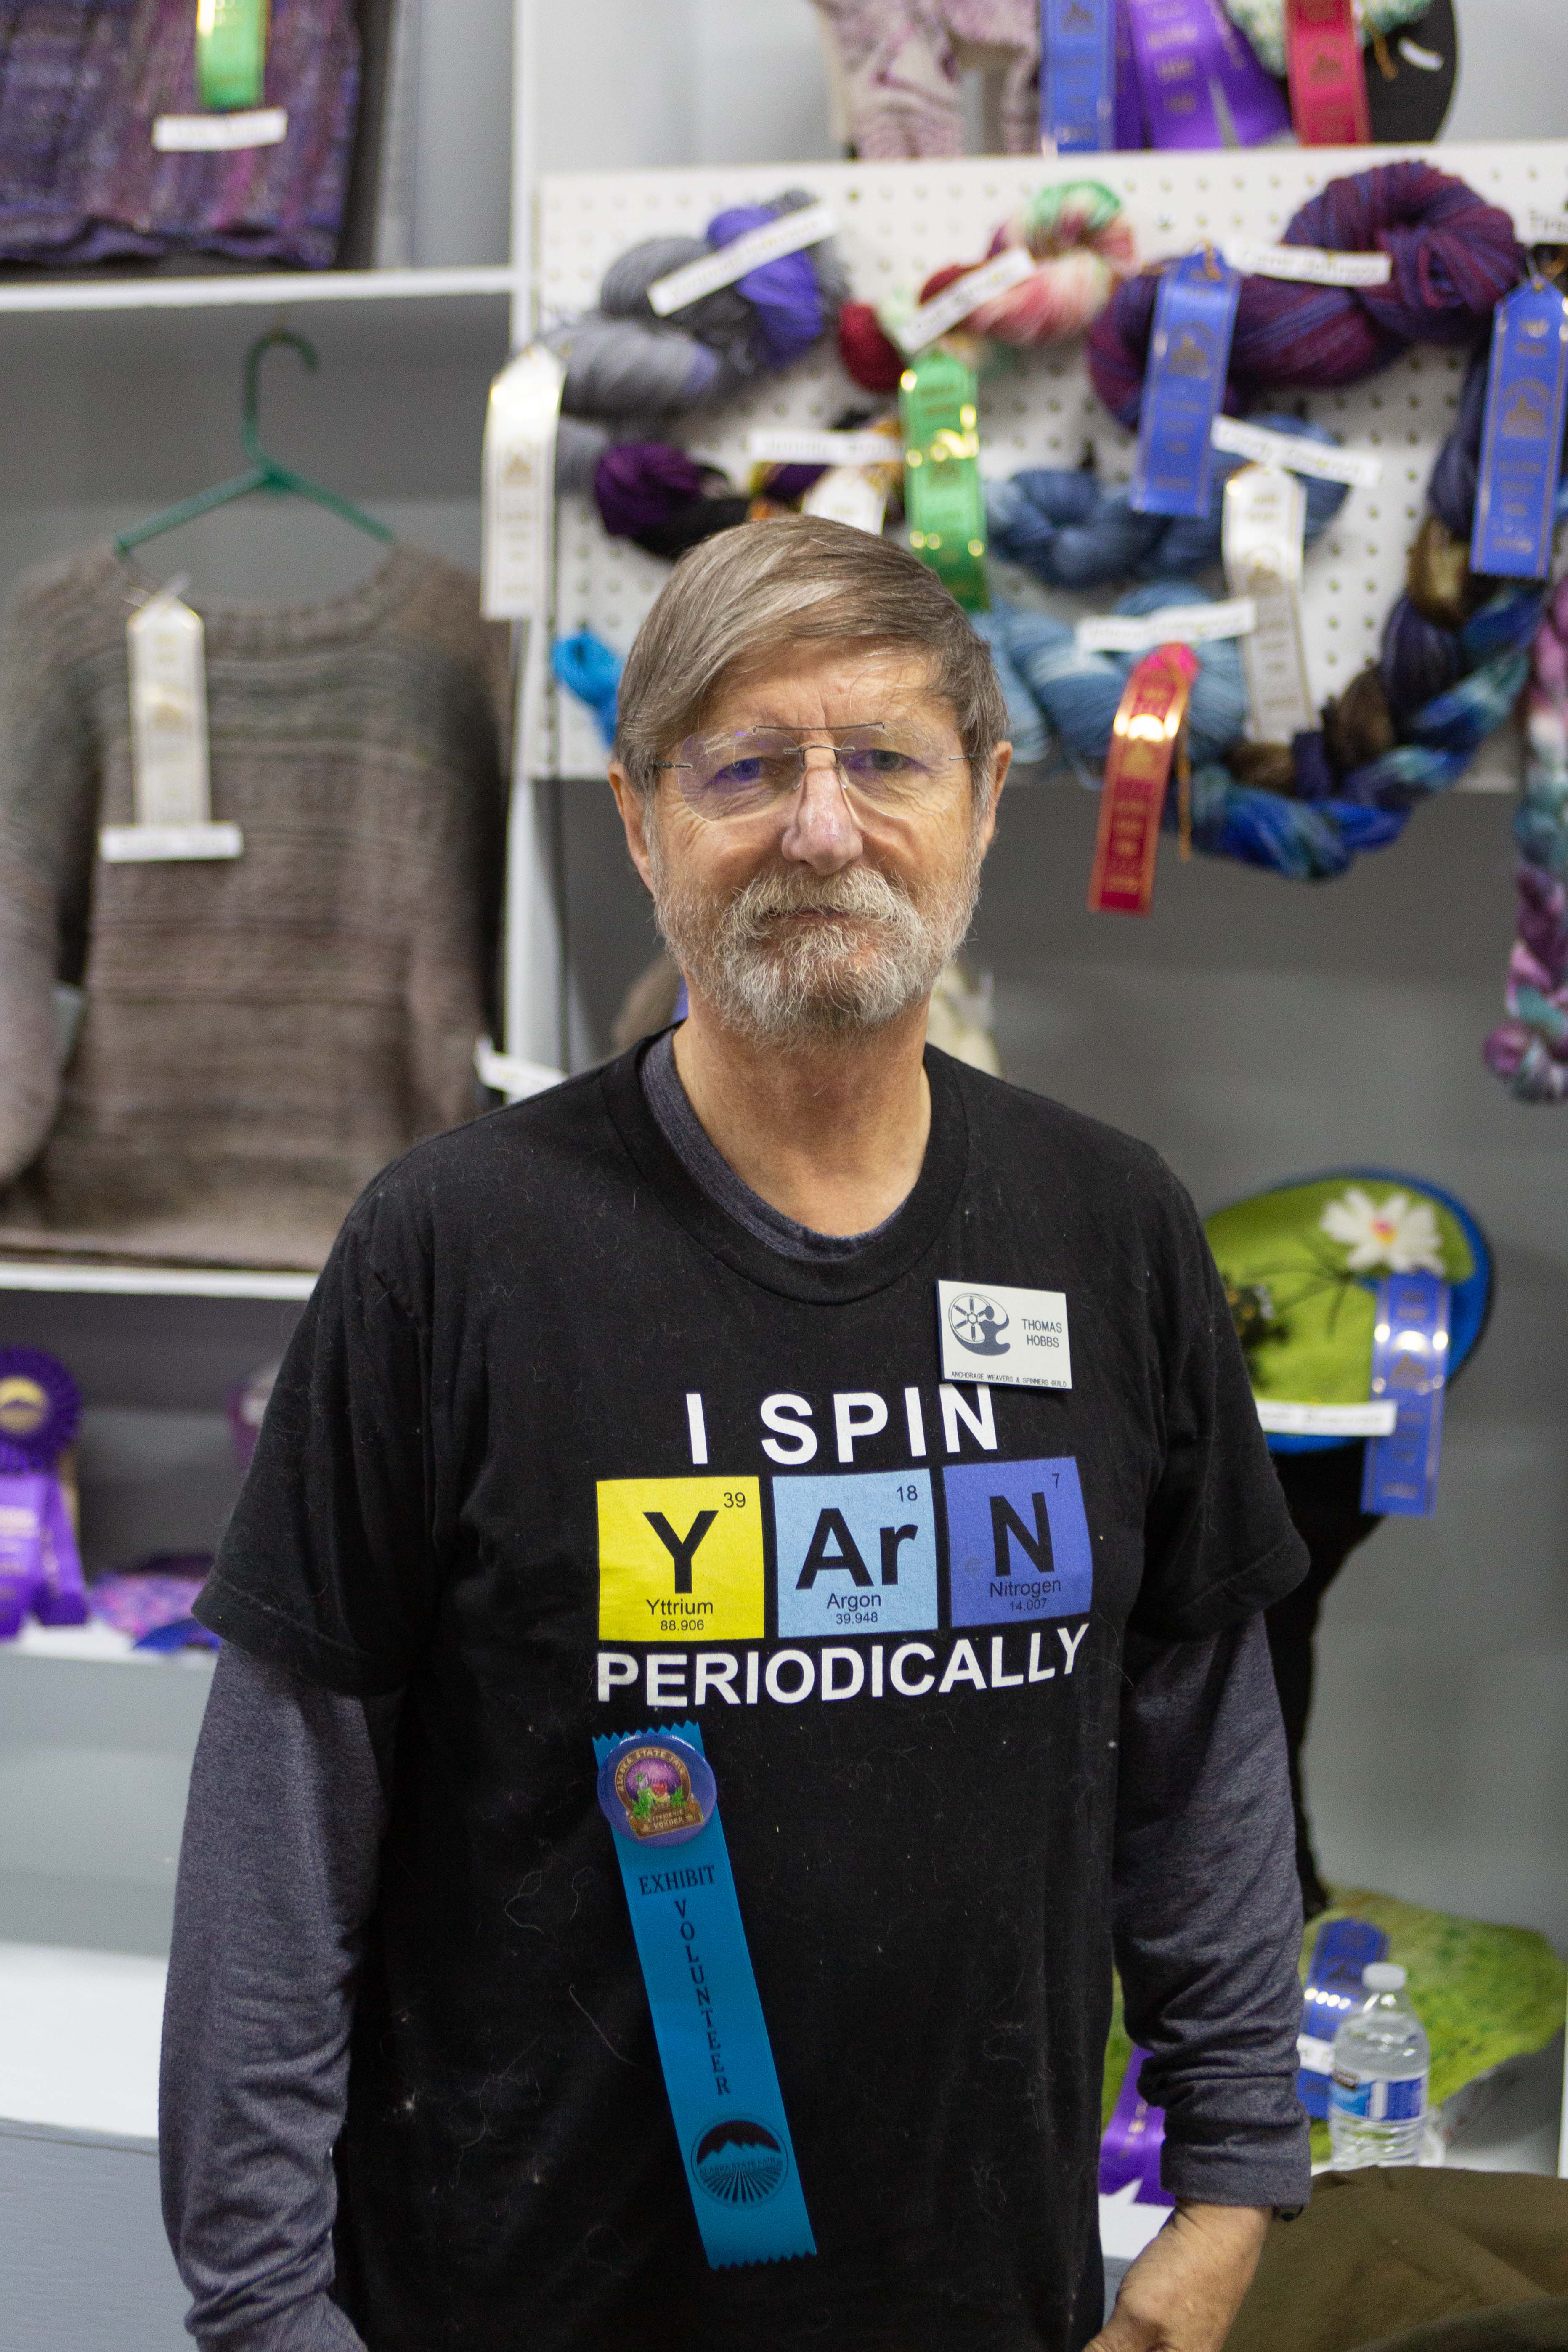 Man with “I Spin Yarn Periodically” shirt